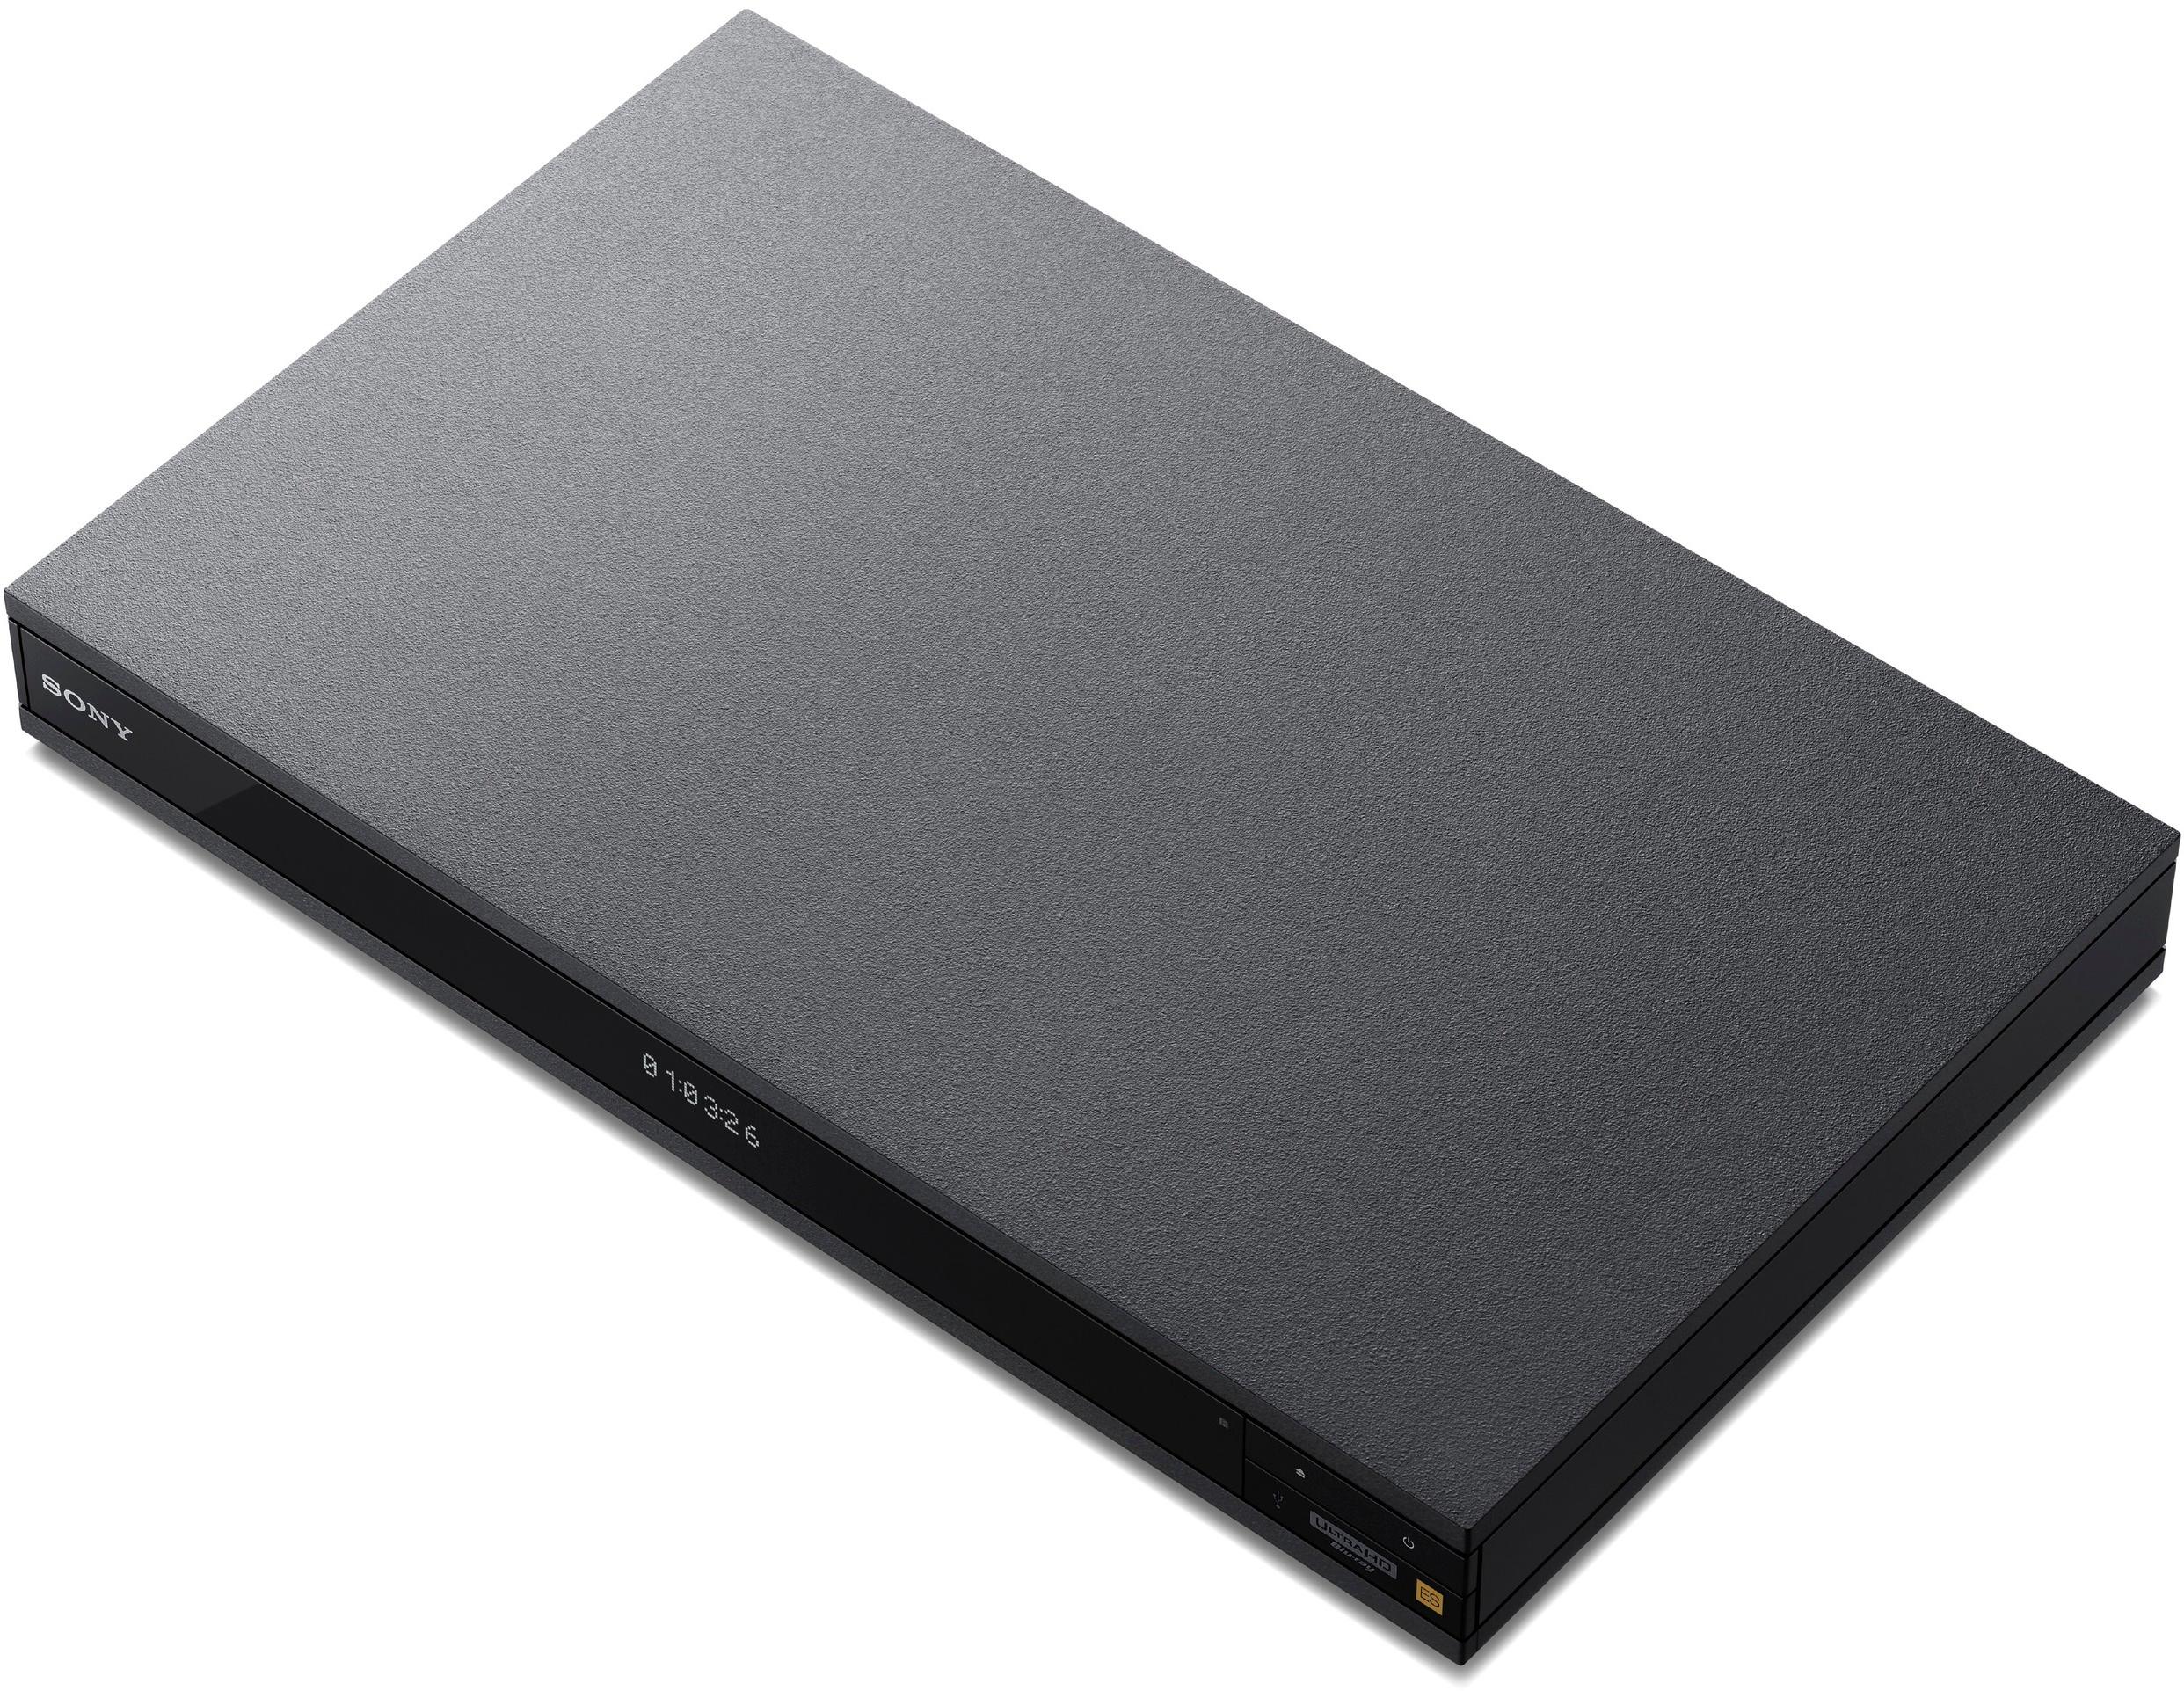 Sony X1000ES: professional 4K Blu-ray player for custom installations